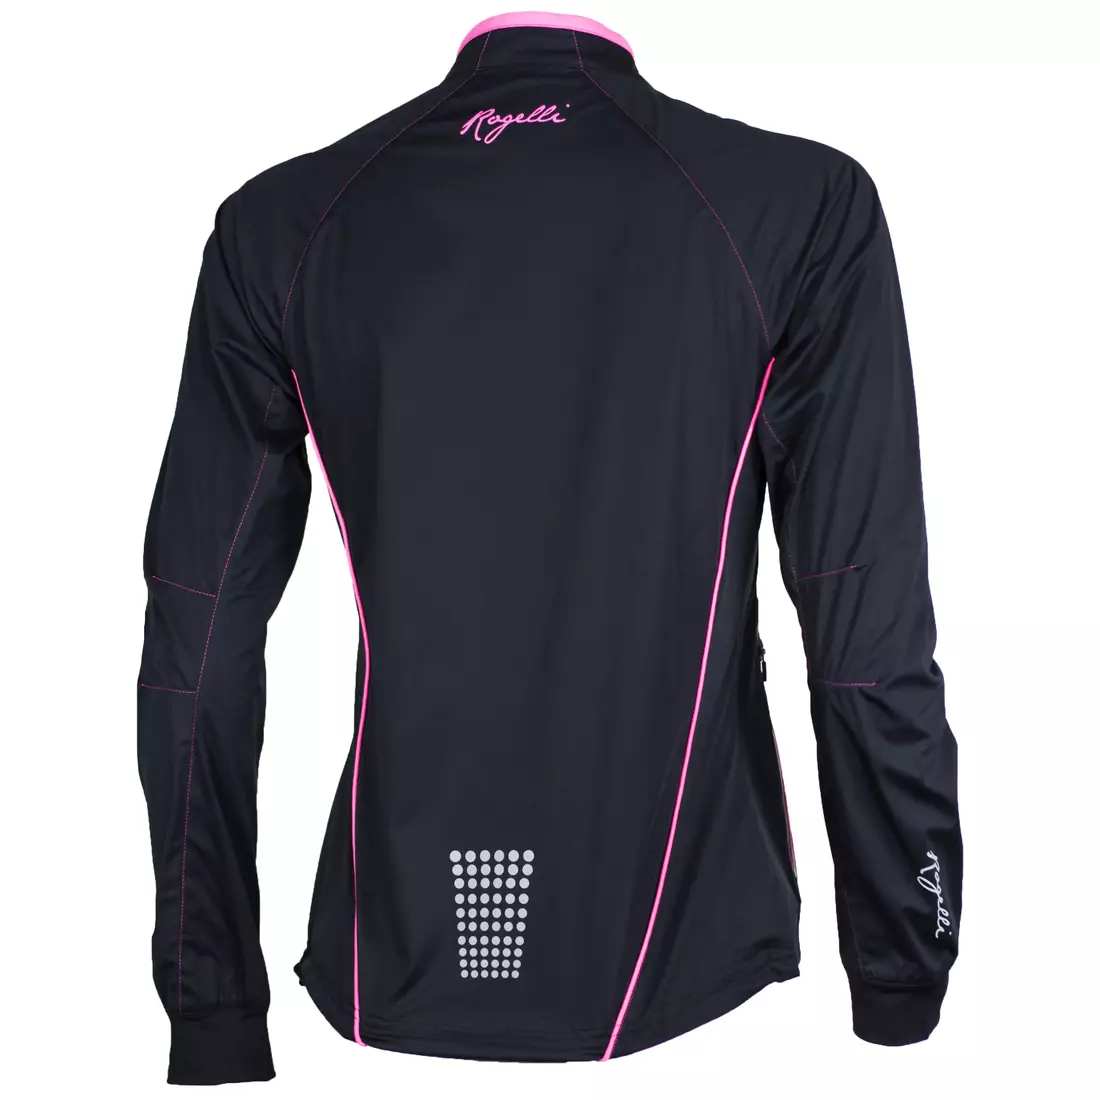 ROGELLI RUN STELLE 801.800 - dámská nepromokavá běžecká bunda, černá a růžová